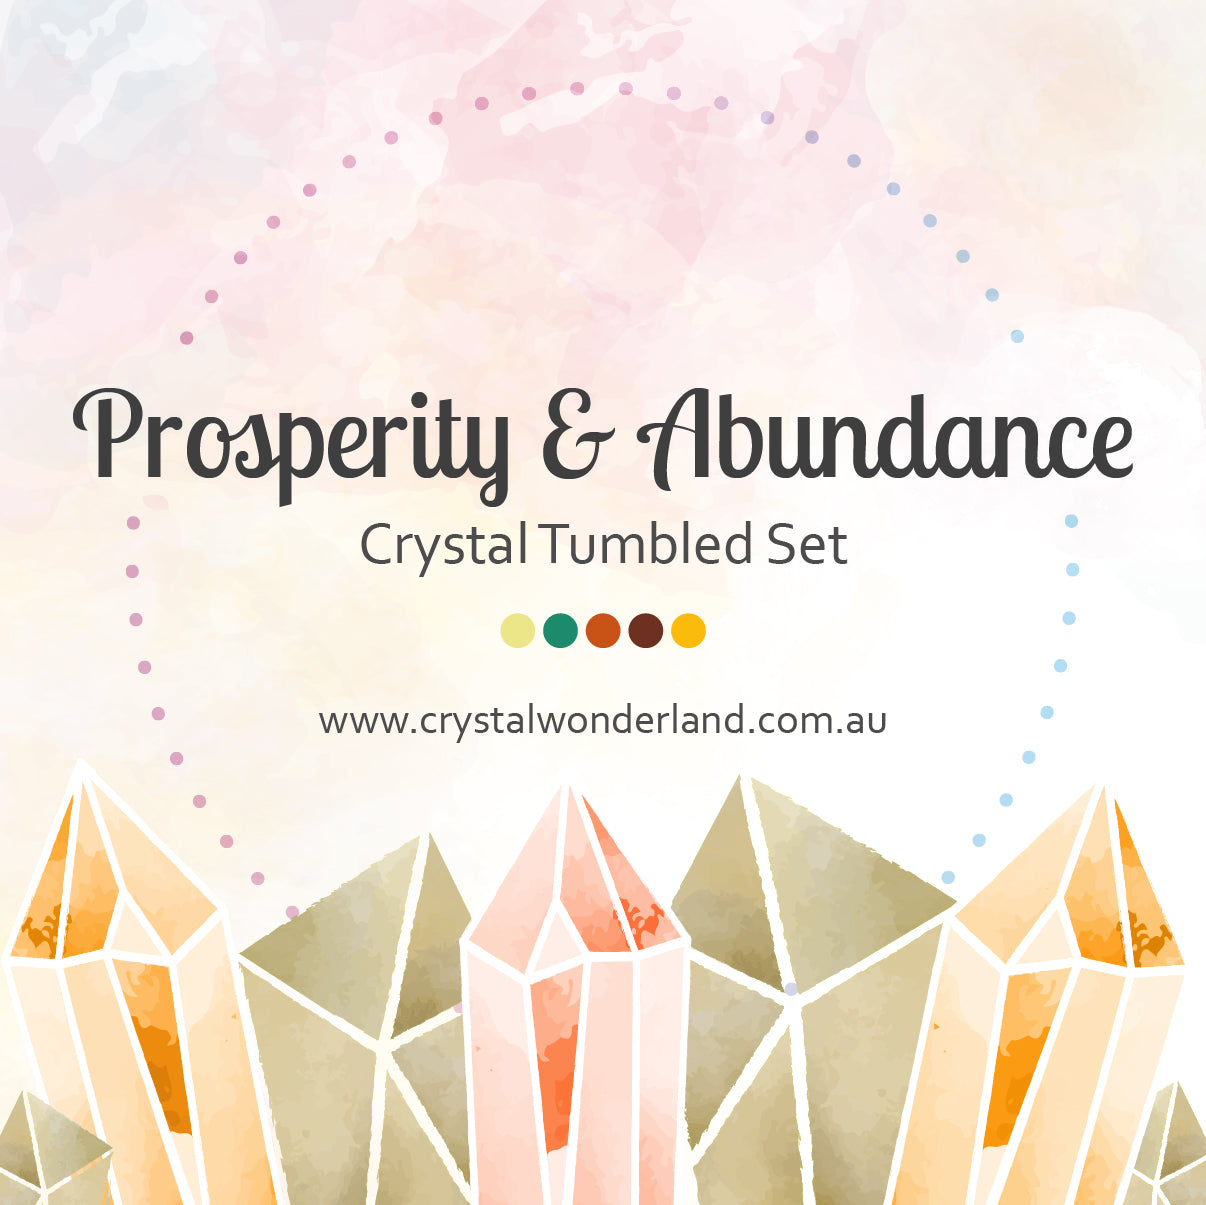 Prosperity & Abundance Crystal Tumbled Gift Set